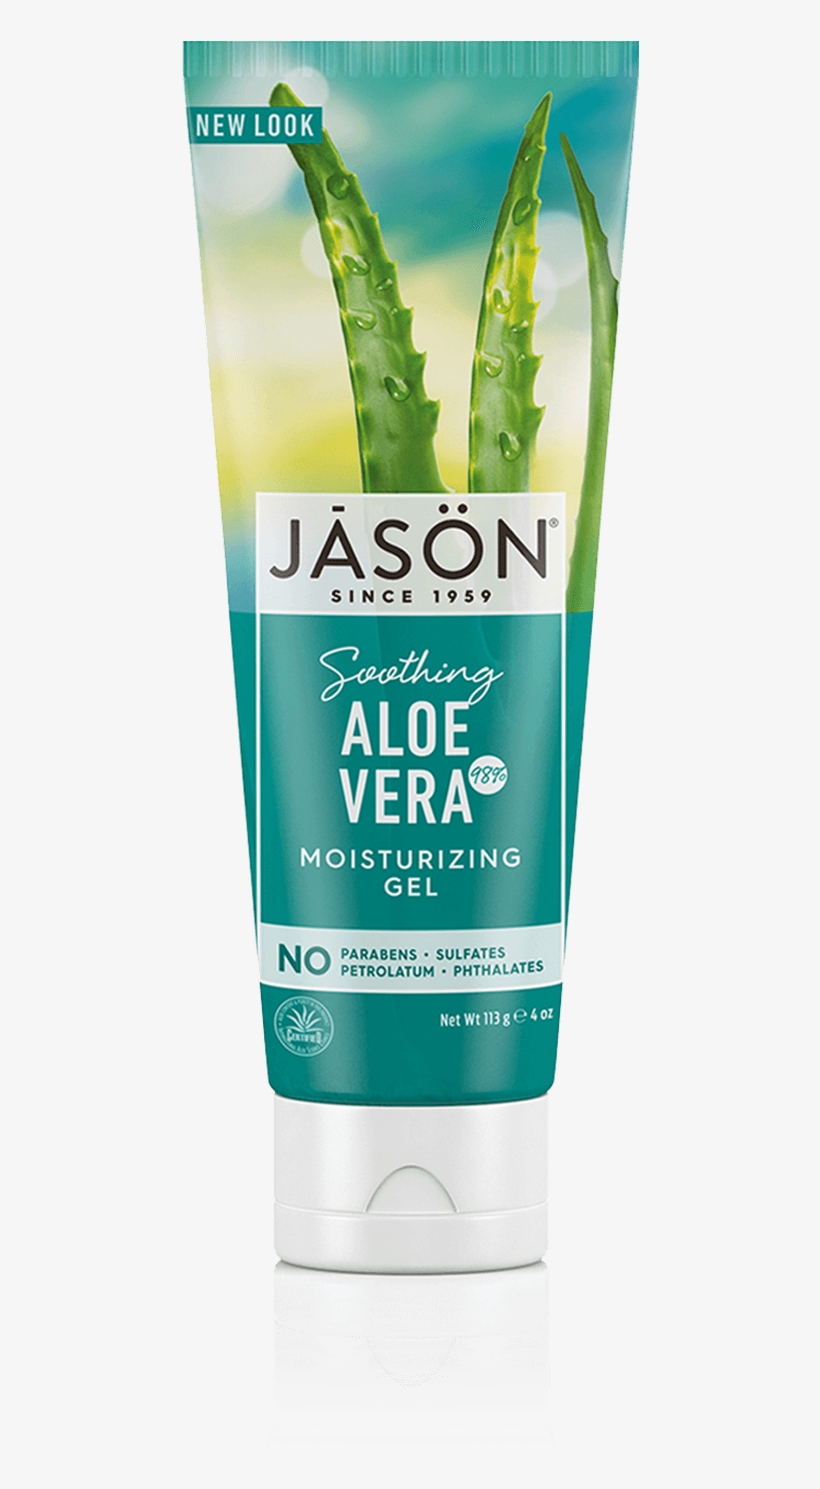 Jason Soothing 98% Aloe Vera Moisturizing Gel, 4 Oz - Jason Soothing 98% Aloe Vera Gel, transparent png #1165896